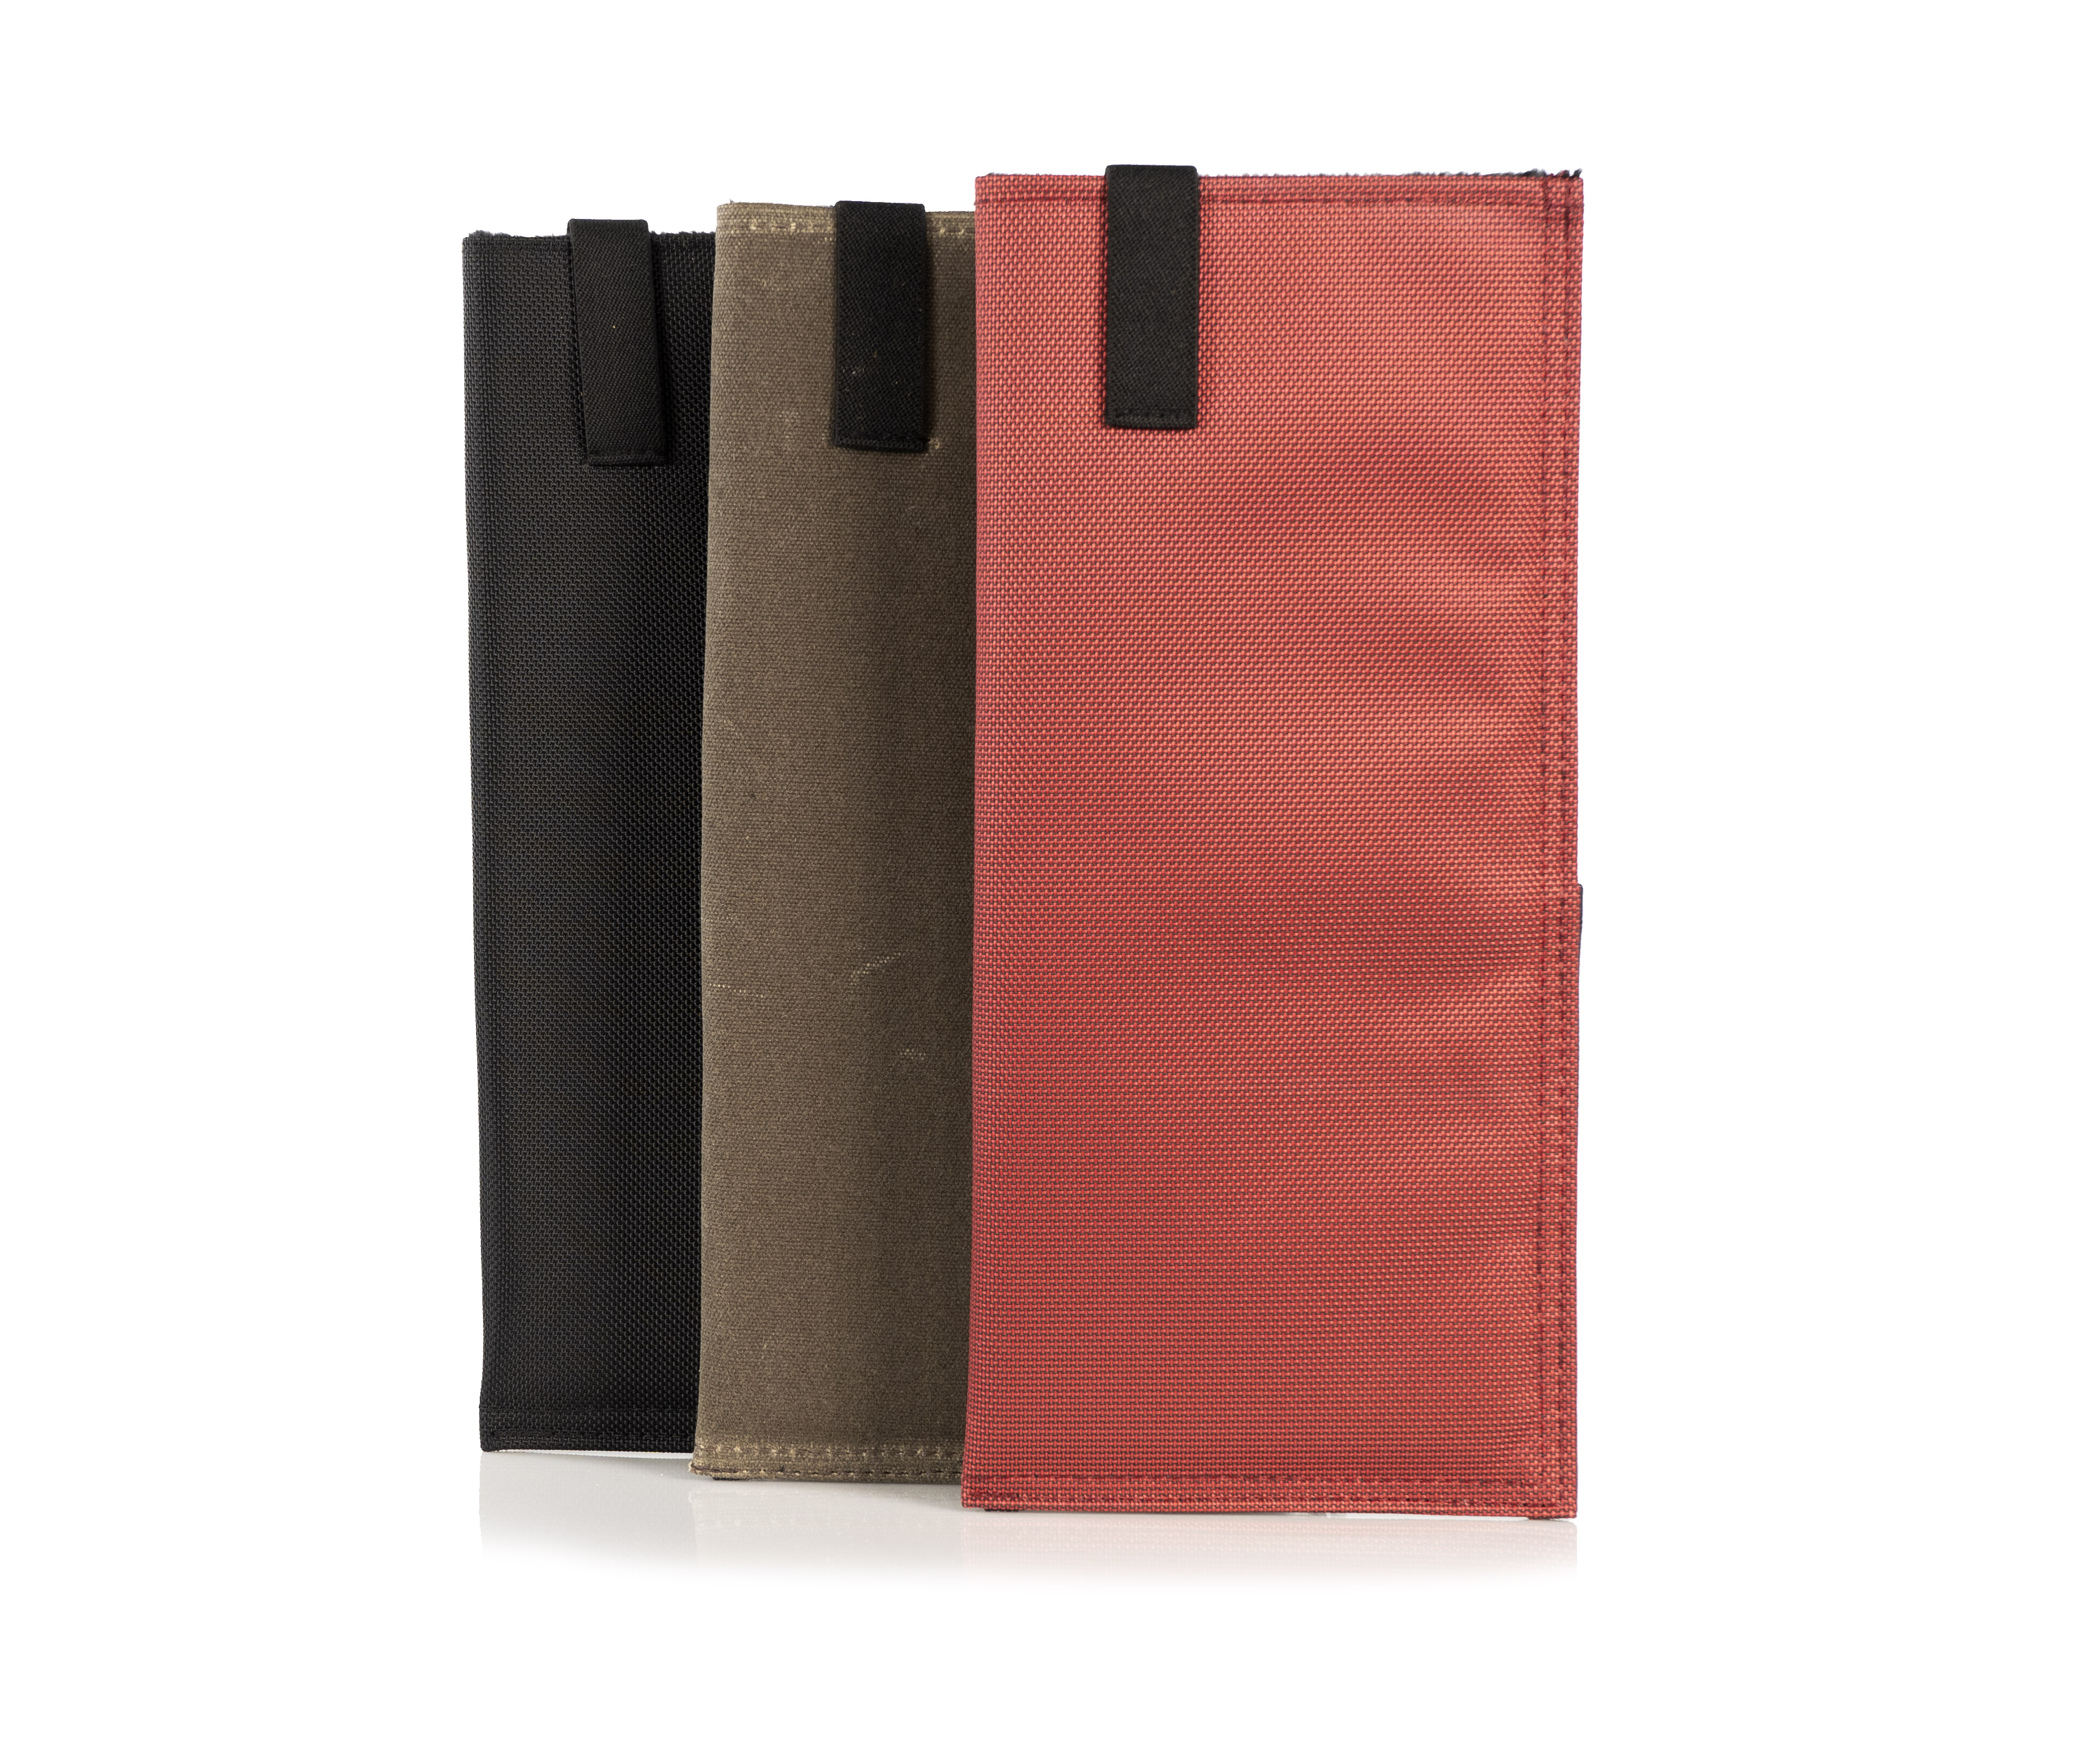 Three material options u2014  ballistic nylon, waxed canvas, and Italian Forza fabric